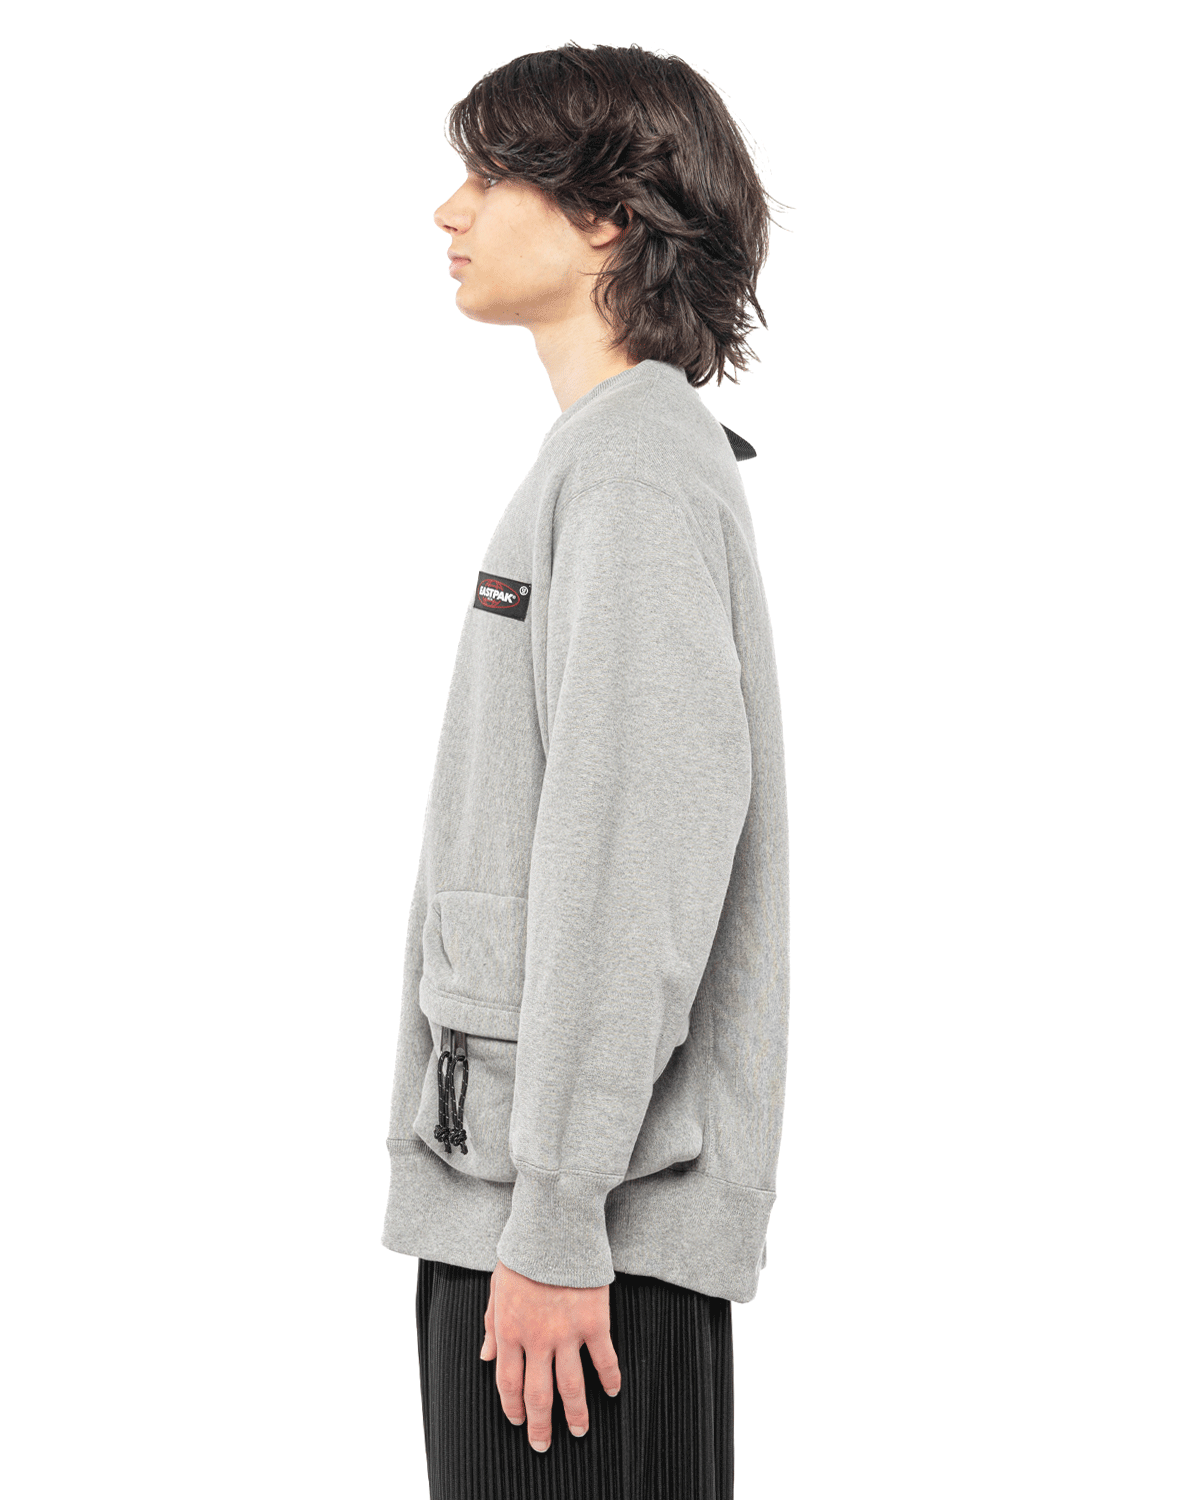 UC1B4801 Eastpak Pocket Sweatshirt Grey